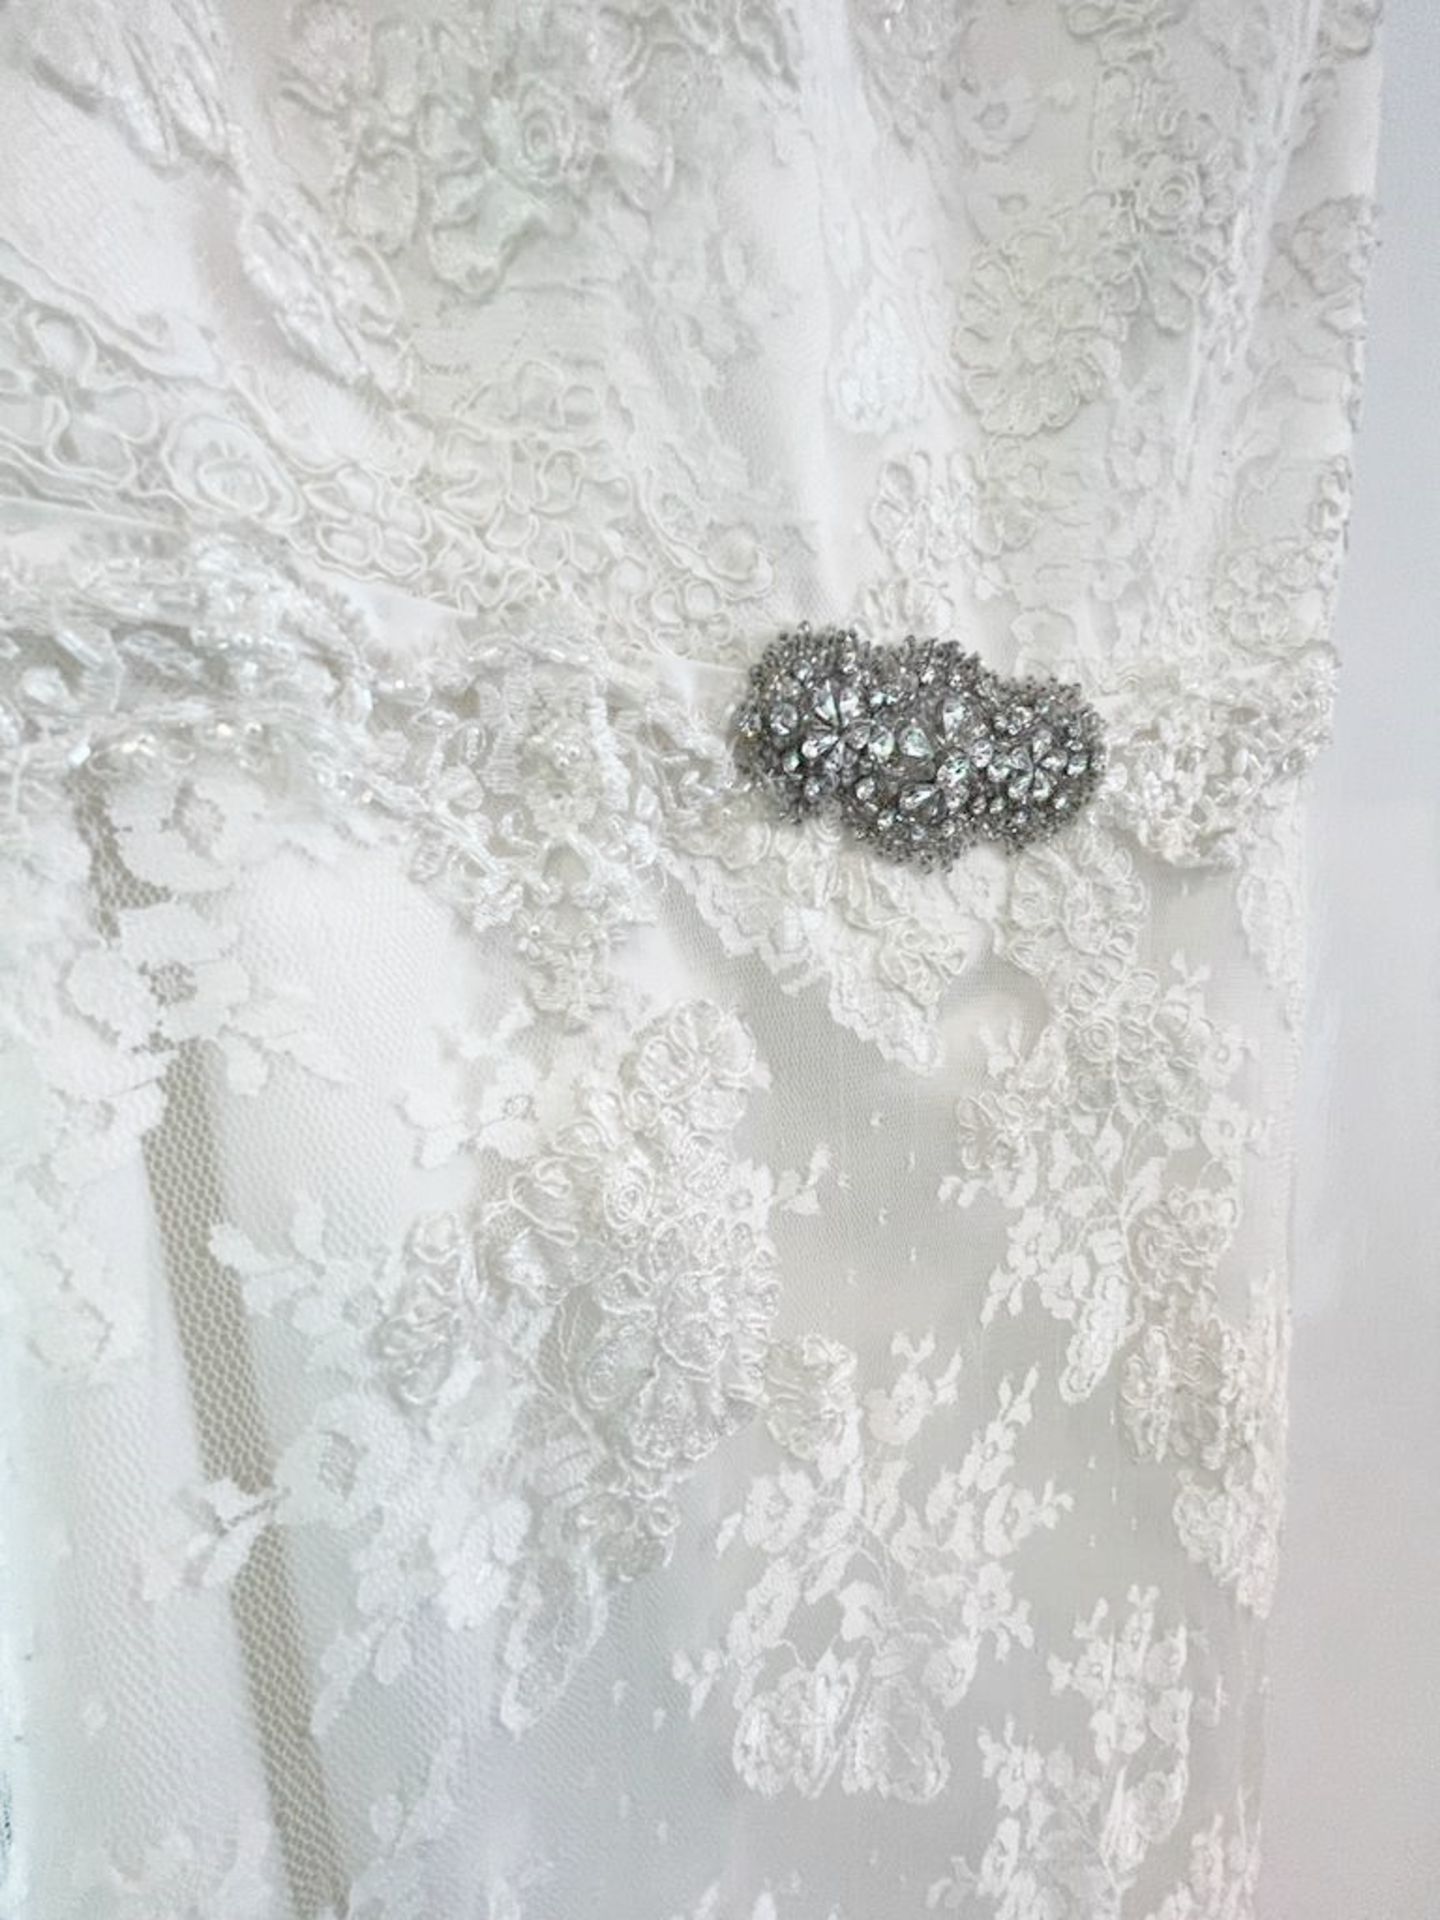 1 x LUSAN MANDONGUS 'Jamie' Designer Chantilly Lace Wedding Dress Bridal Gown, With Satin - Image 4 of 13